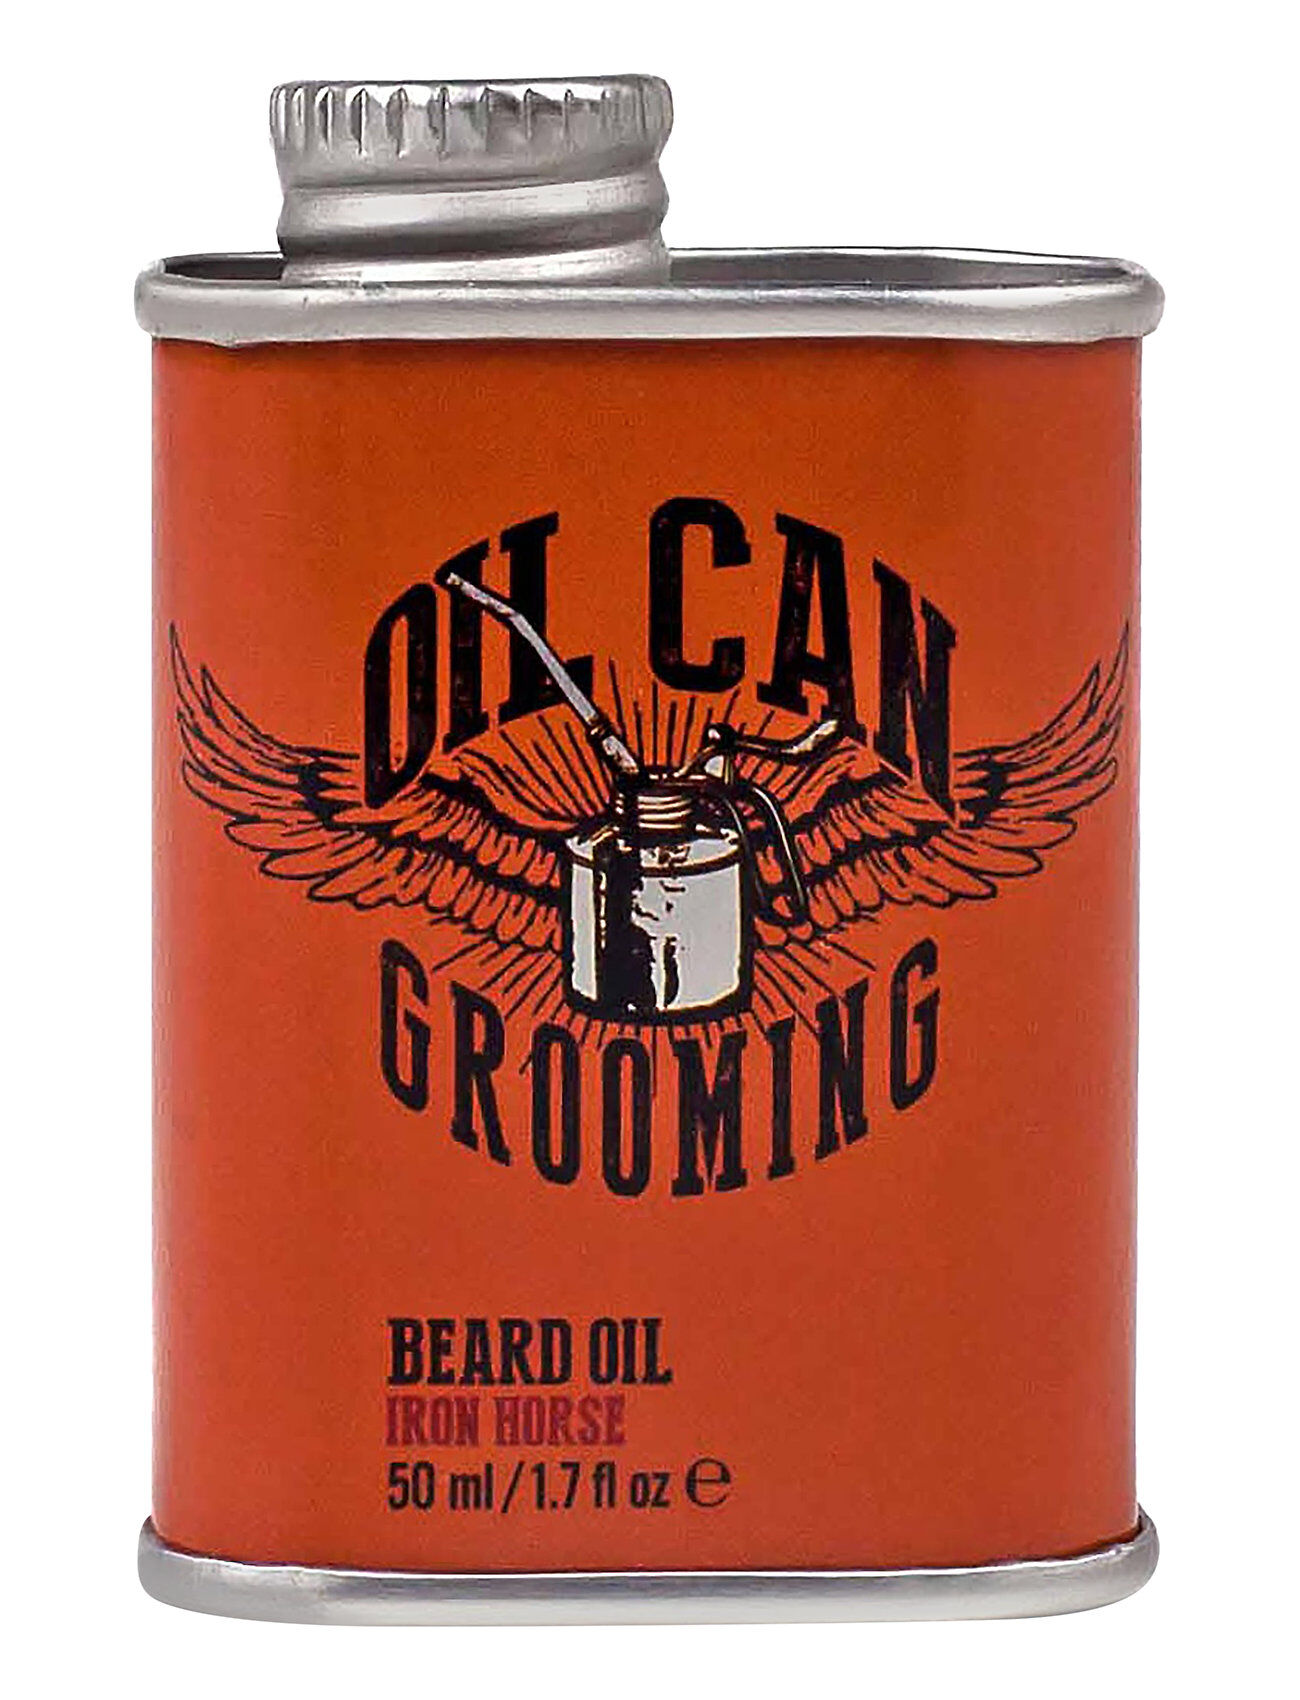 Oil Can Grooming Iron Horse Beard Oil Beauty MEN Shaving Products Beard Oil Nude Oil Can Grooming